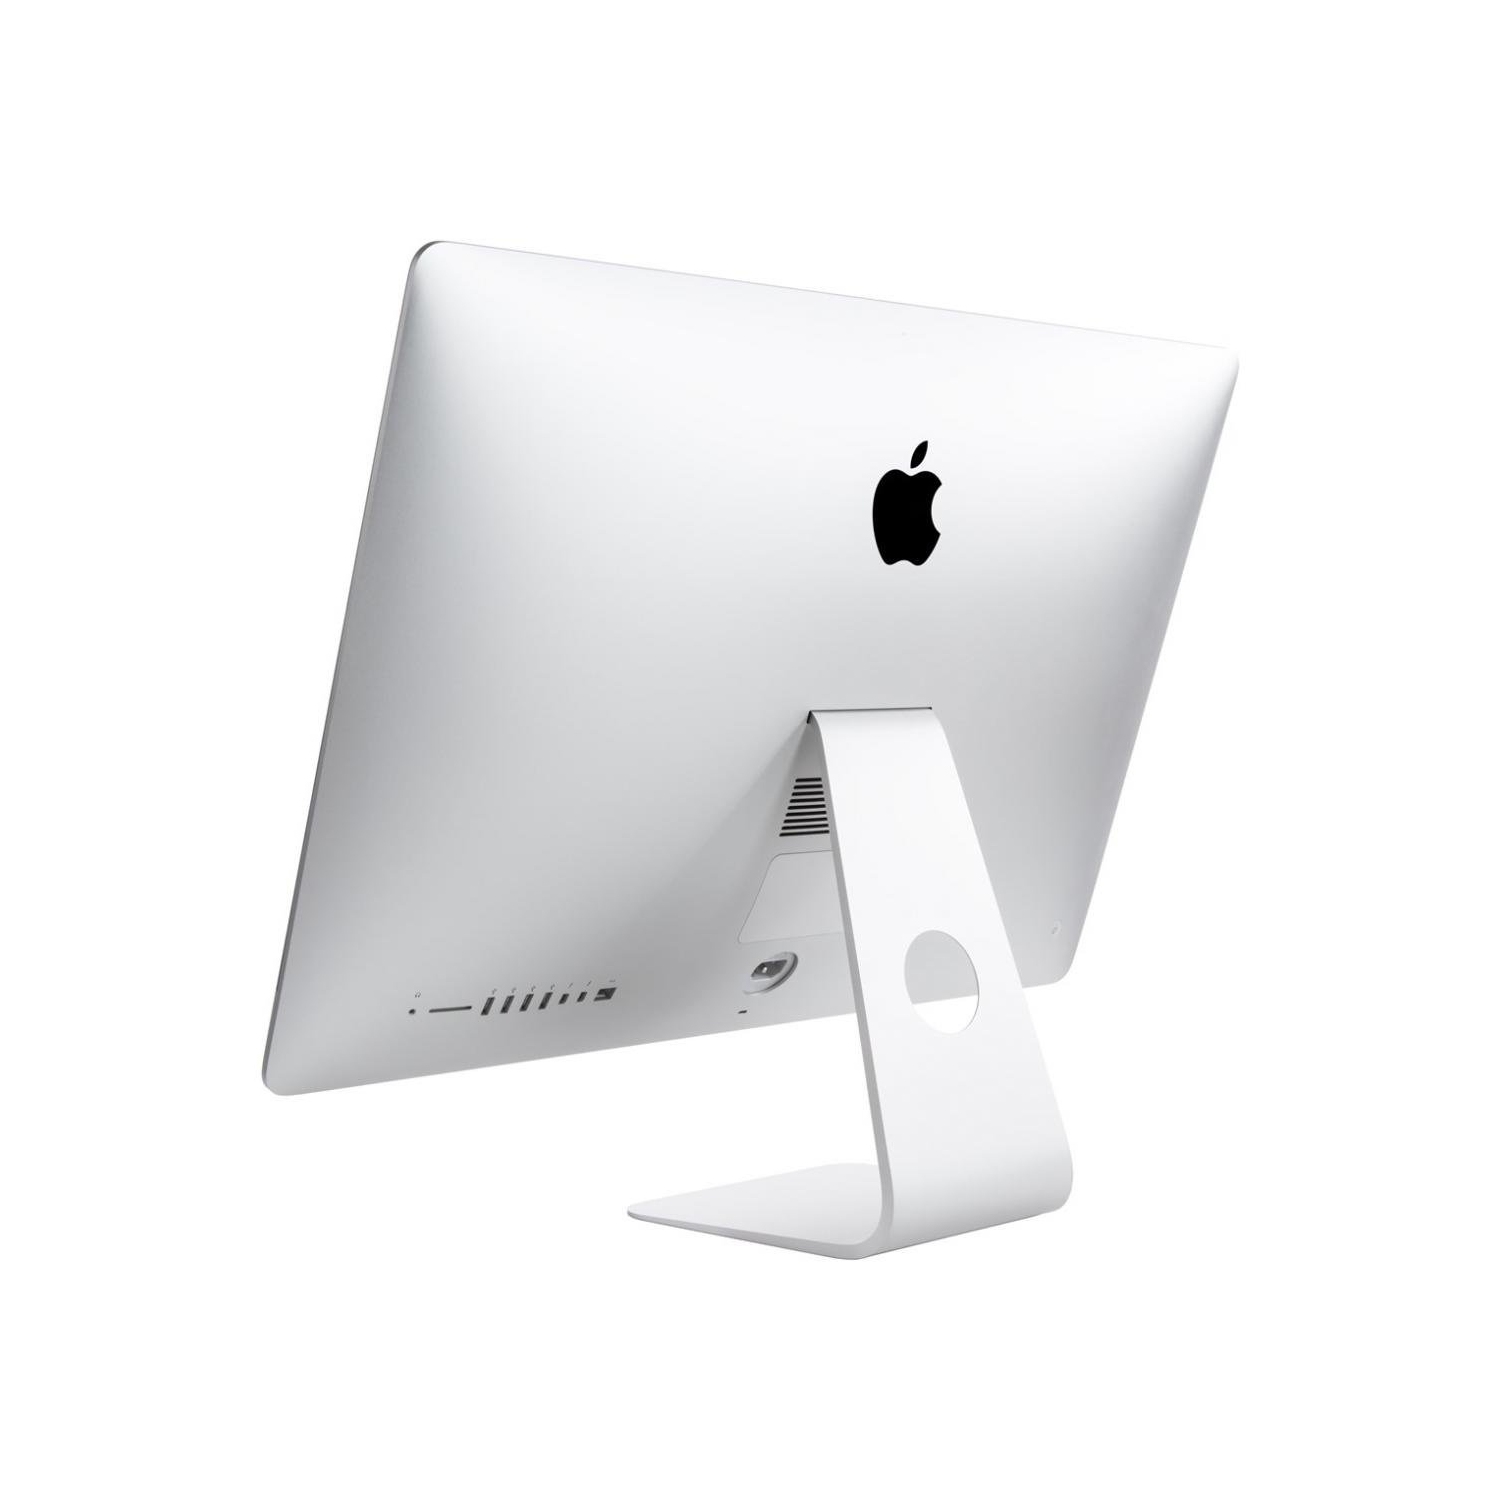 Refurbished (Good) - Apple iMac 21.5